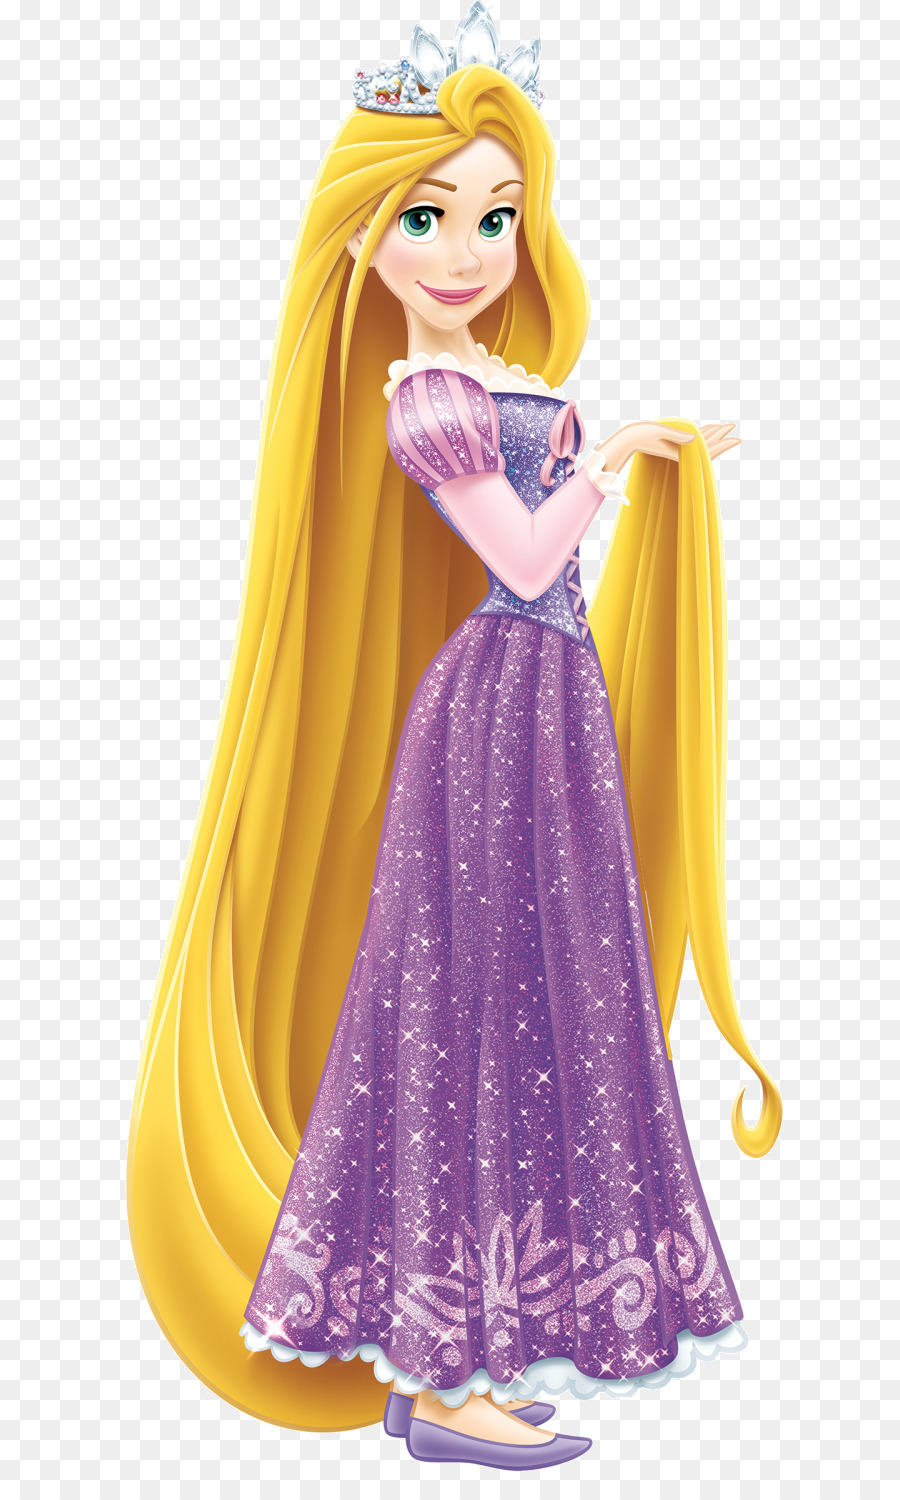 Rapunzel Tangled Wall decal Disney Princess Sticker - rapunzel png download - 696*1500 - Free Transparent Rapunzel png Download.